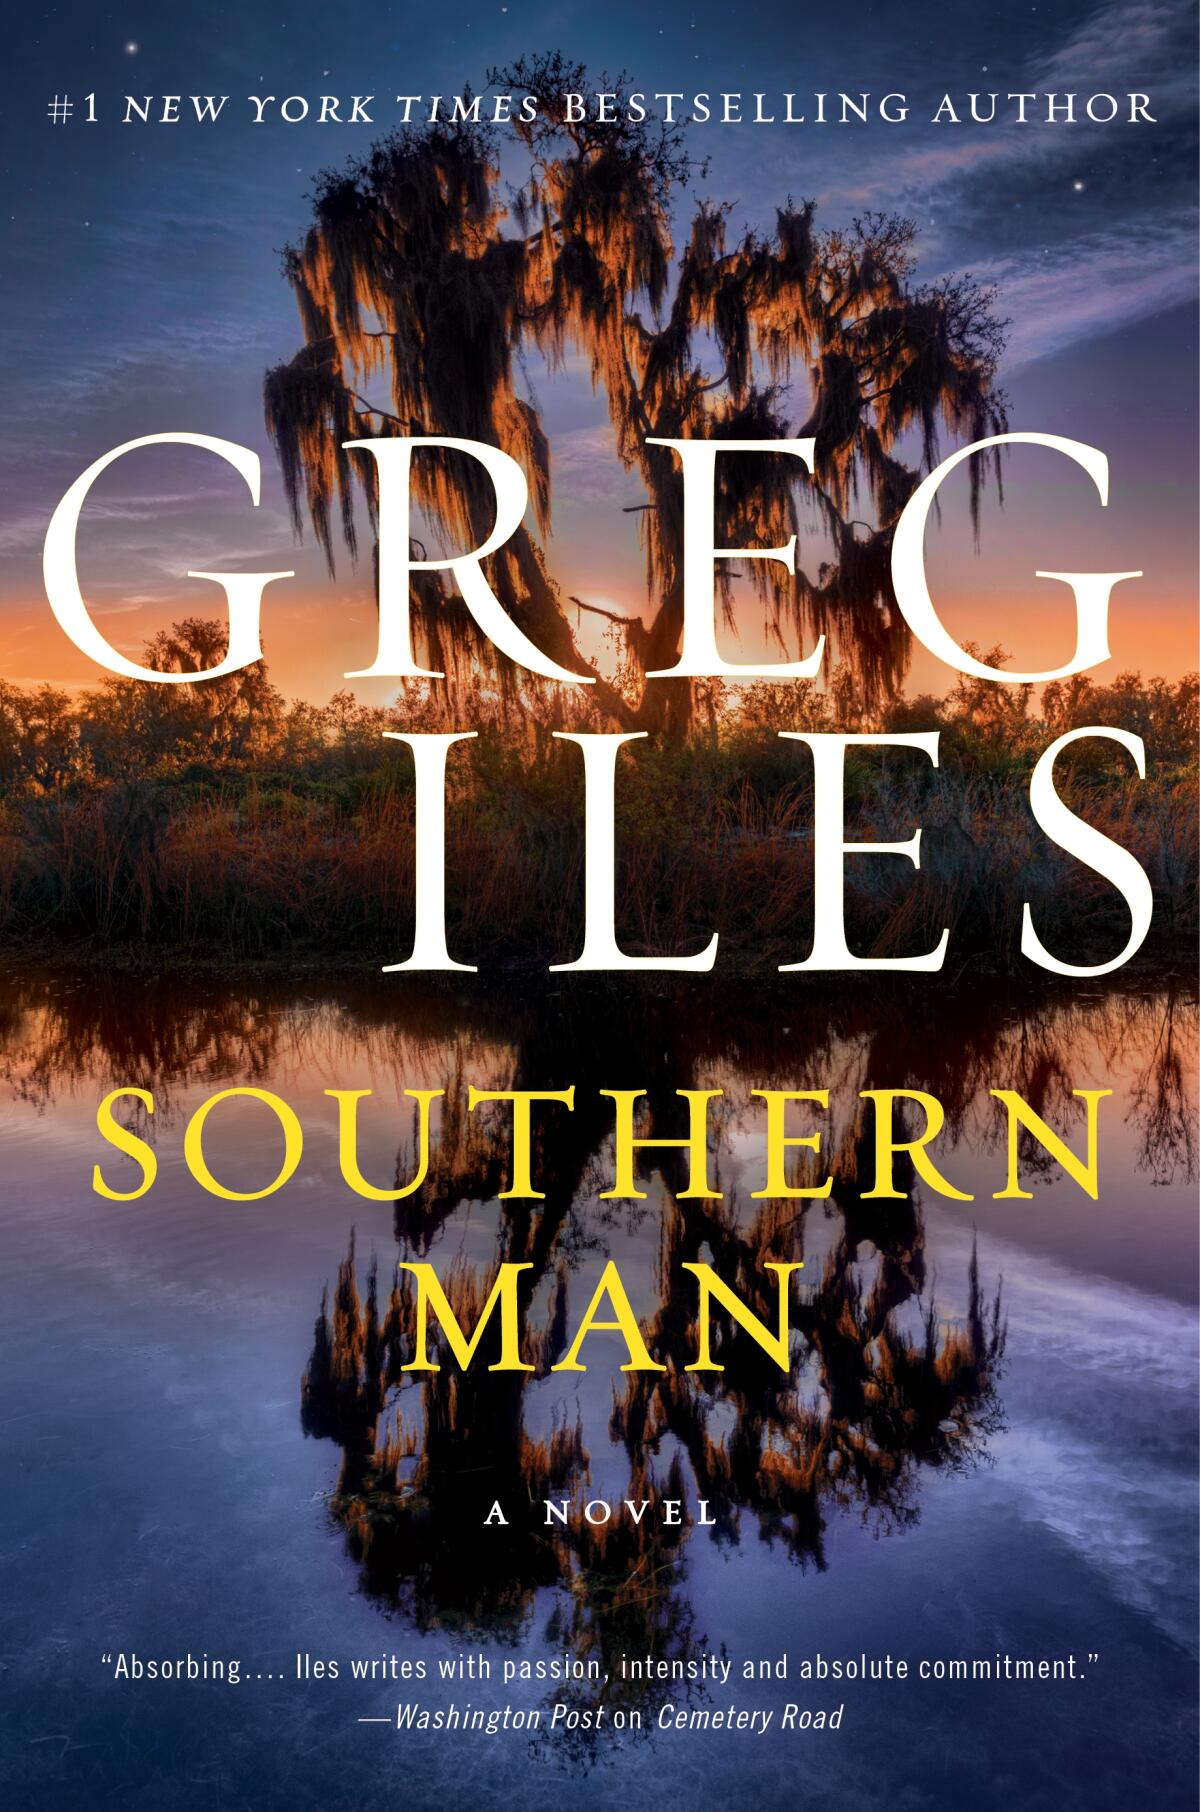 "Southern Man" by Greg Iles